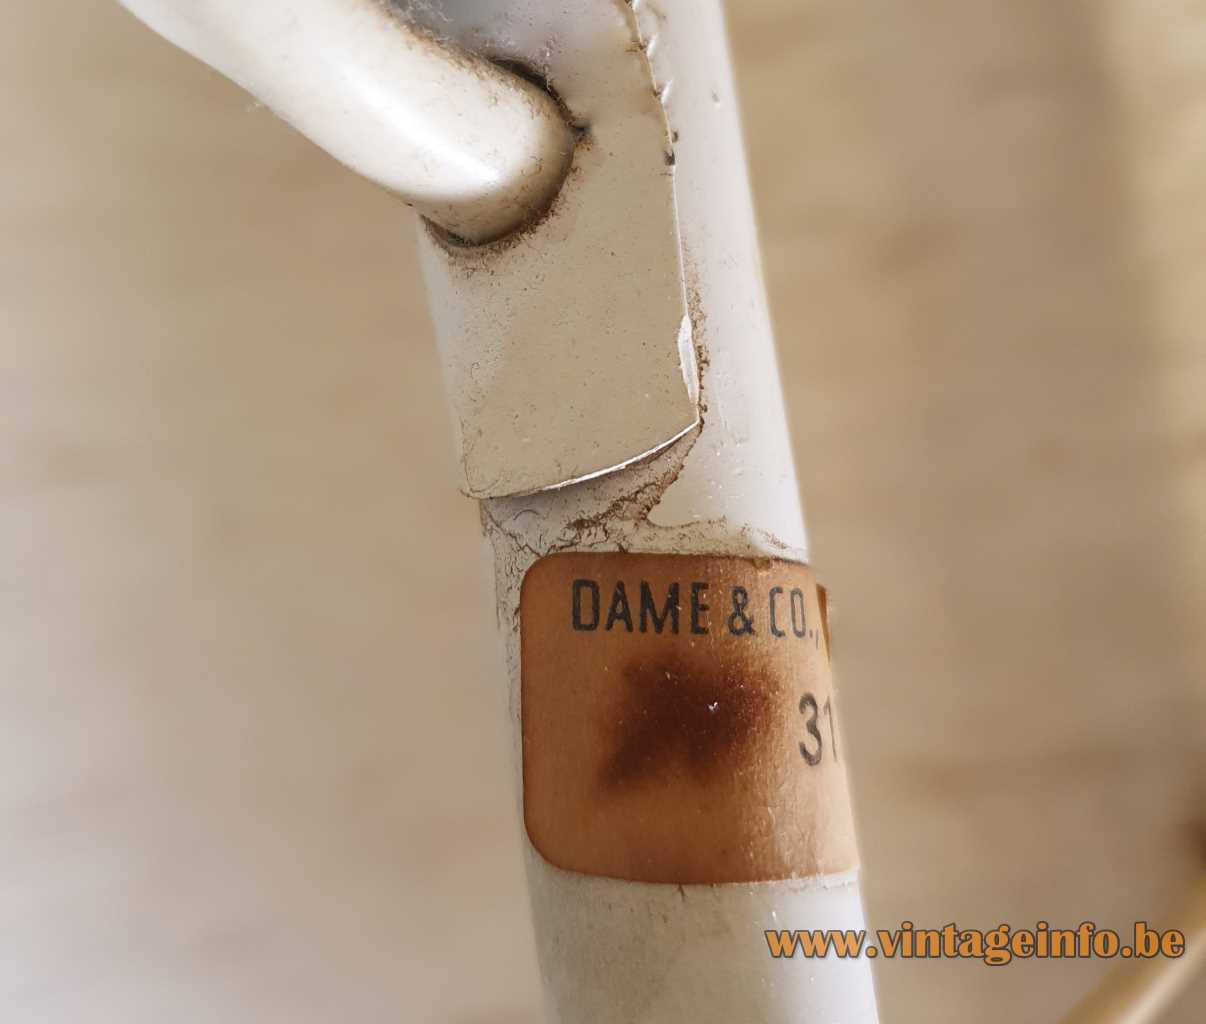 Dame & Co rocket floor lamp white metal rod paper company label 1960s Neheim-Hüsten Germany 